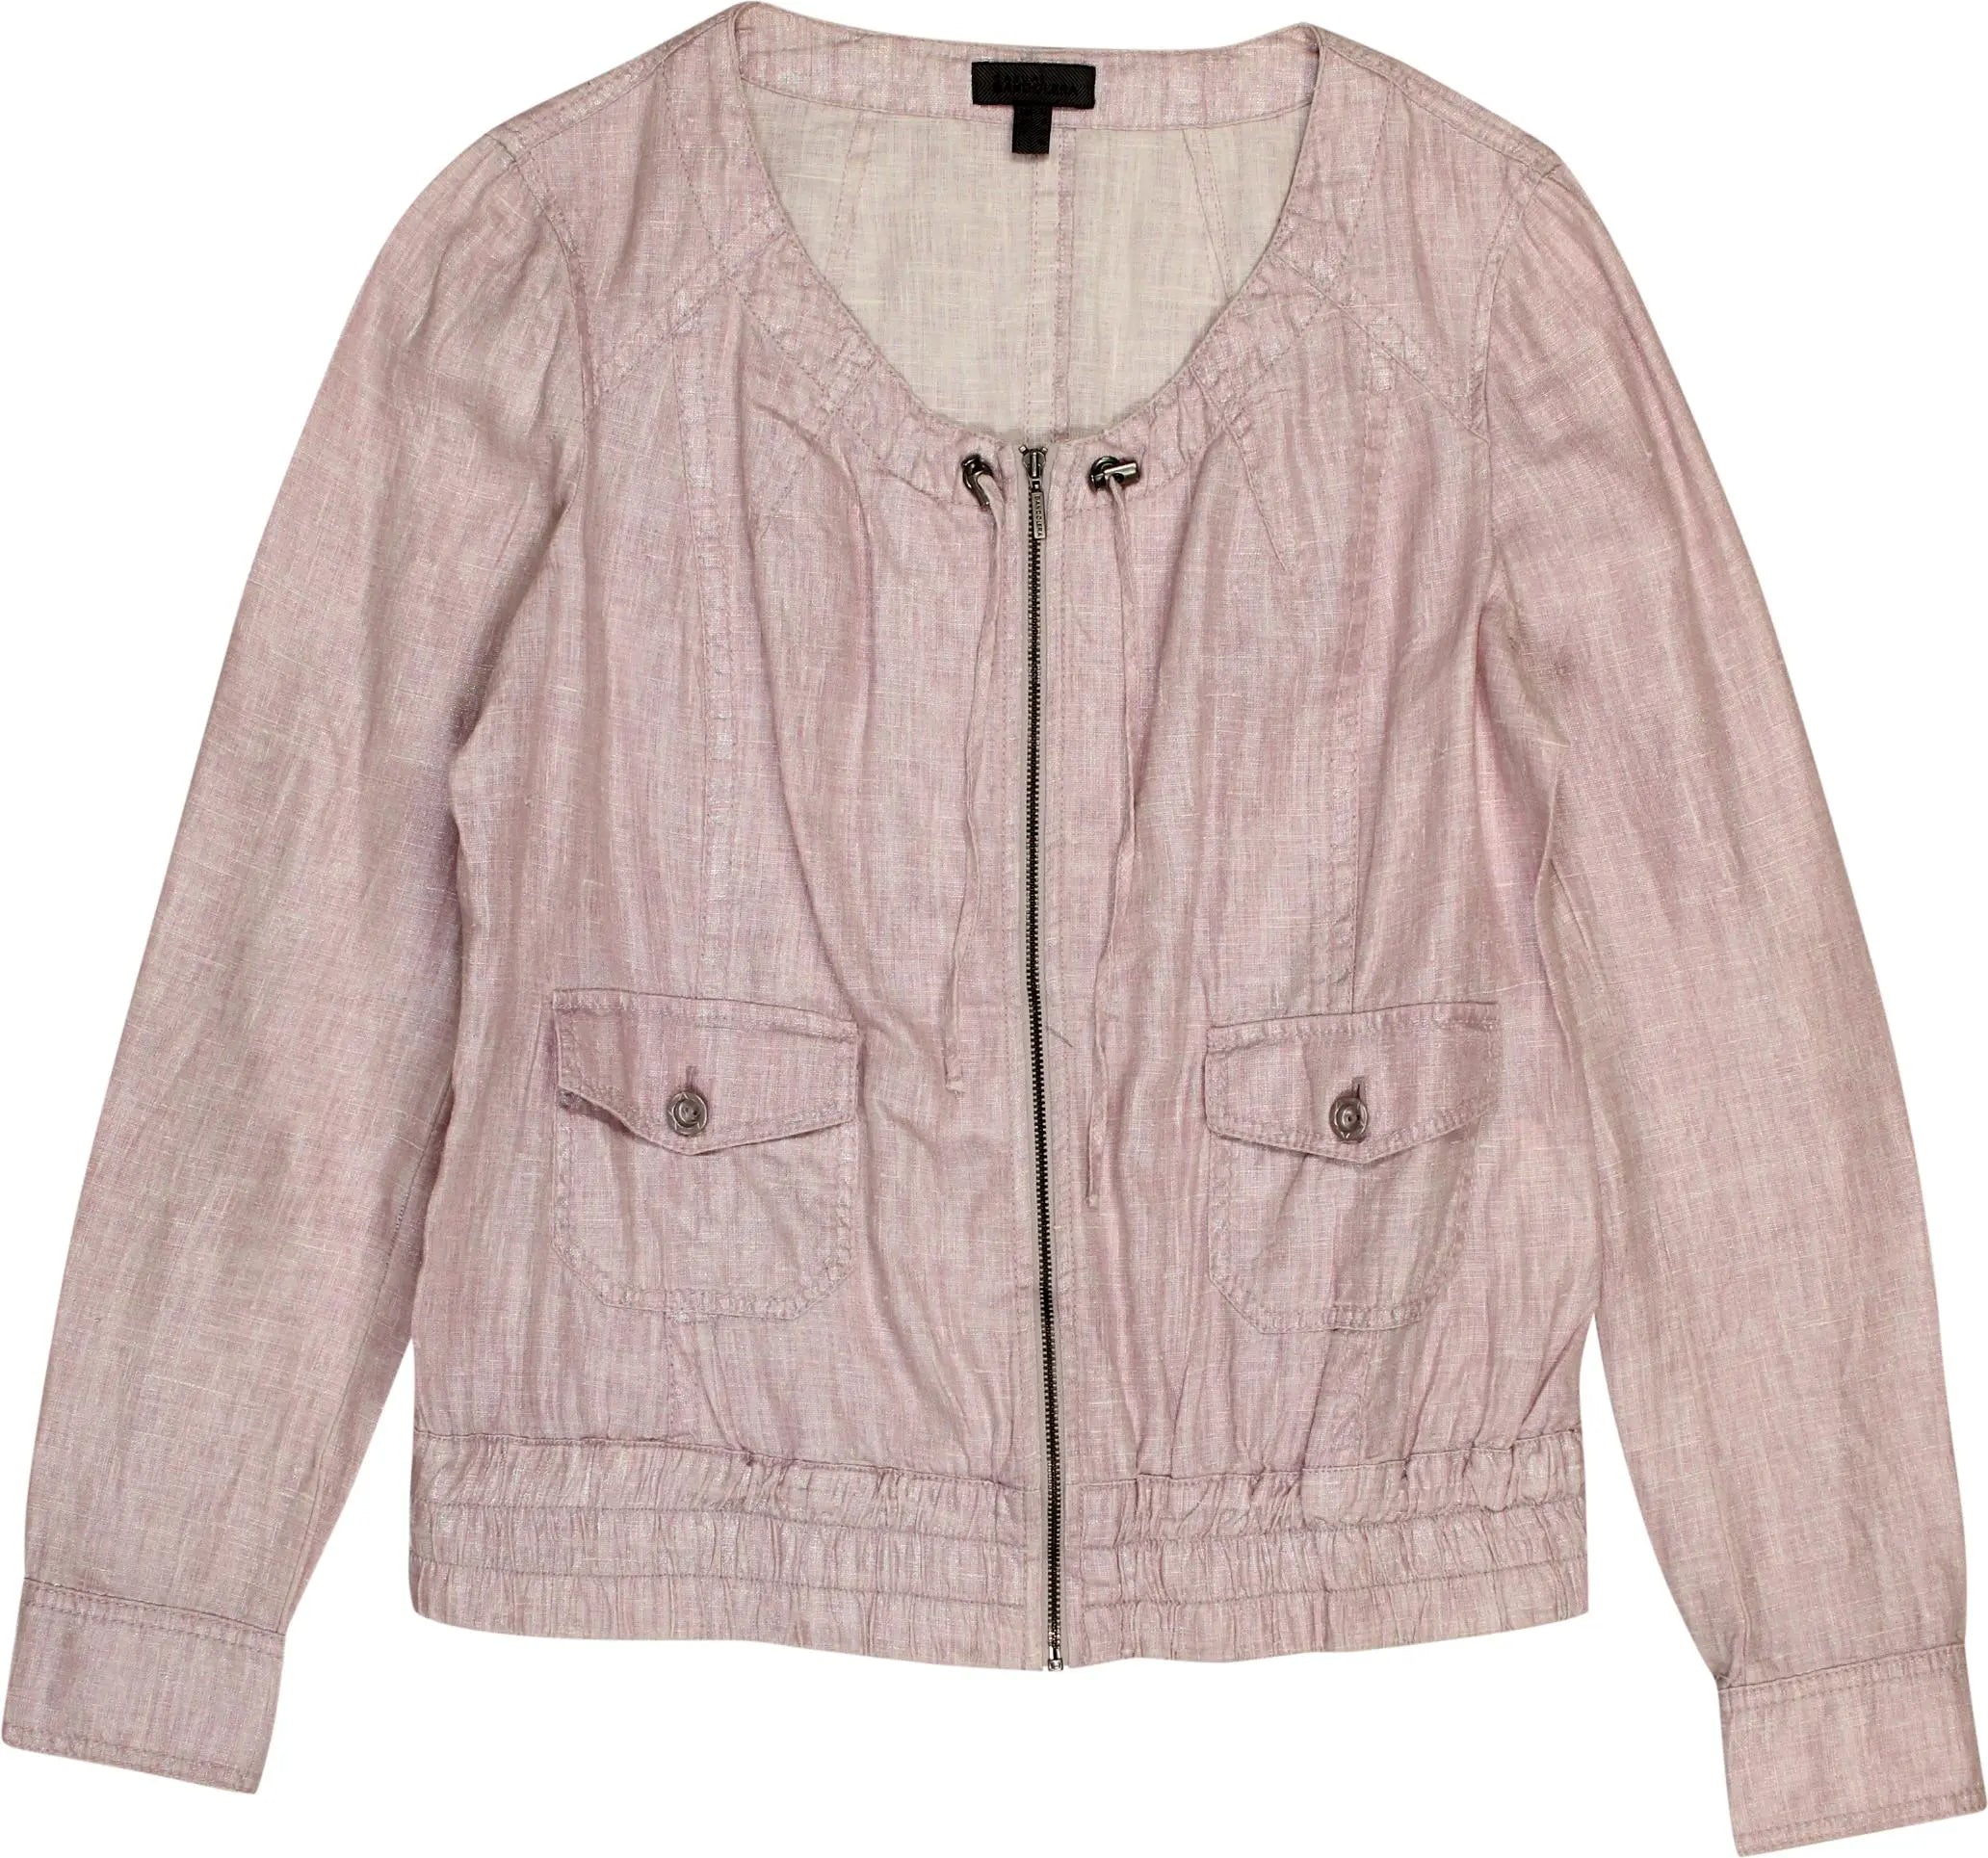 Bandolera - Pink Shimmer Jacket- ThriftTale.com - Vintage and second handclothing